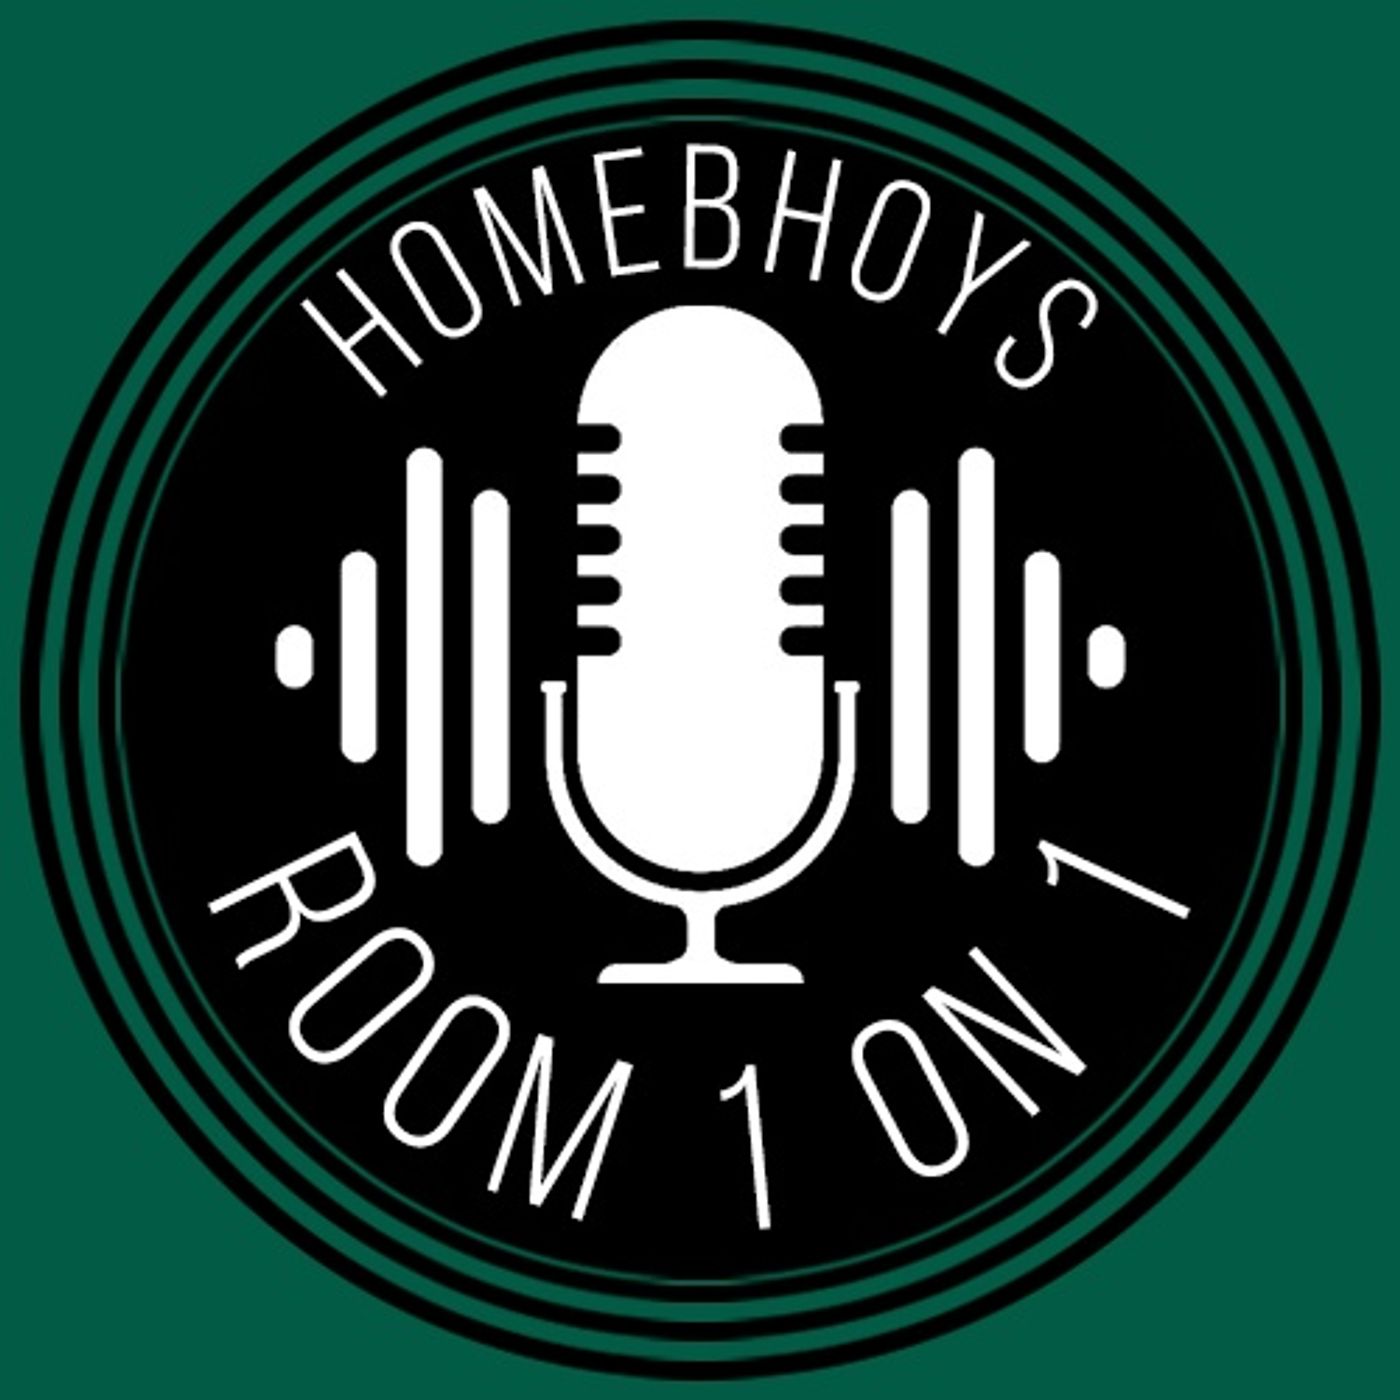 Homebhoys - Room 1 on 1 - Lazio